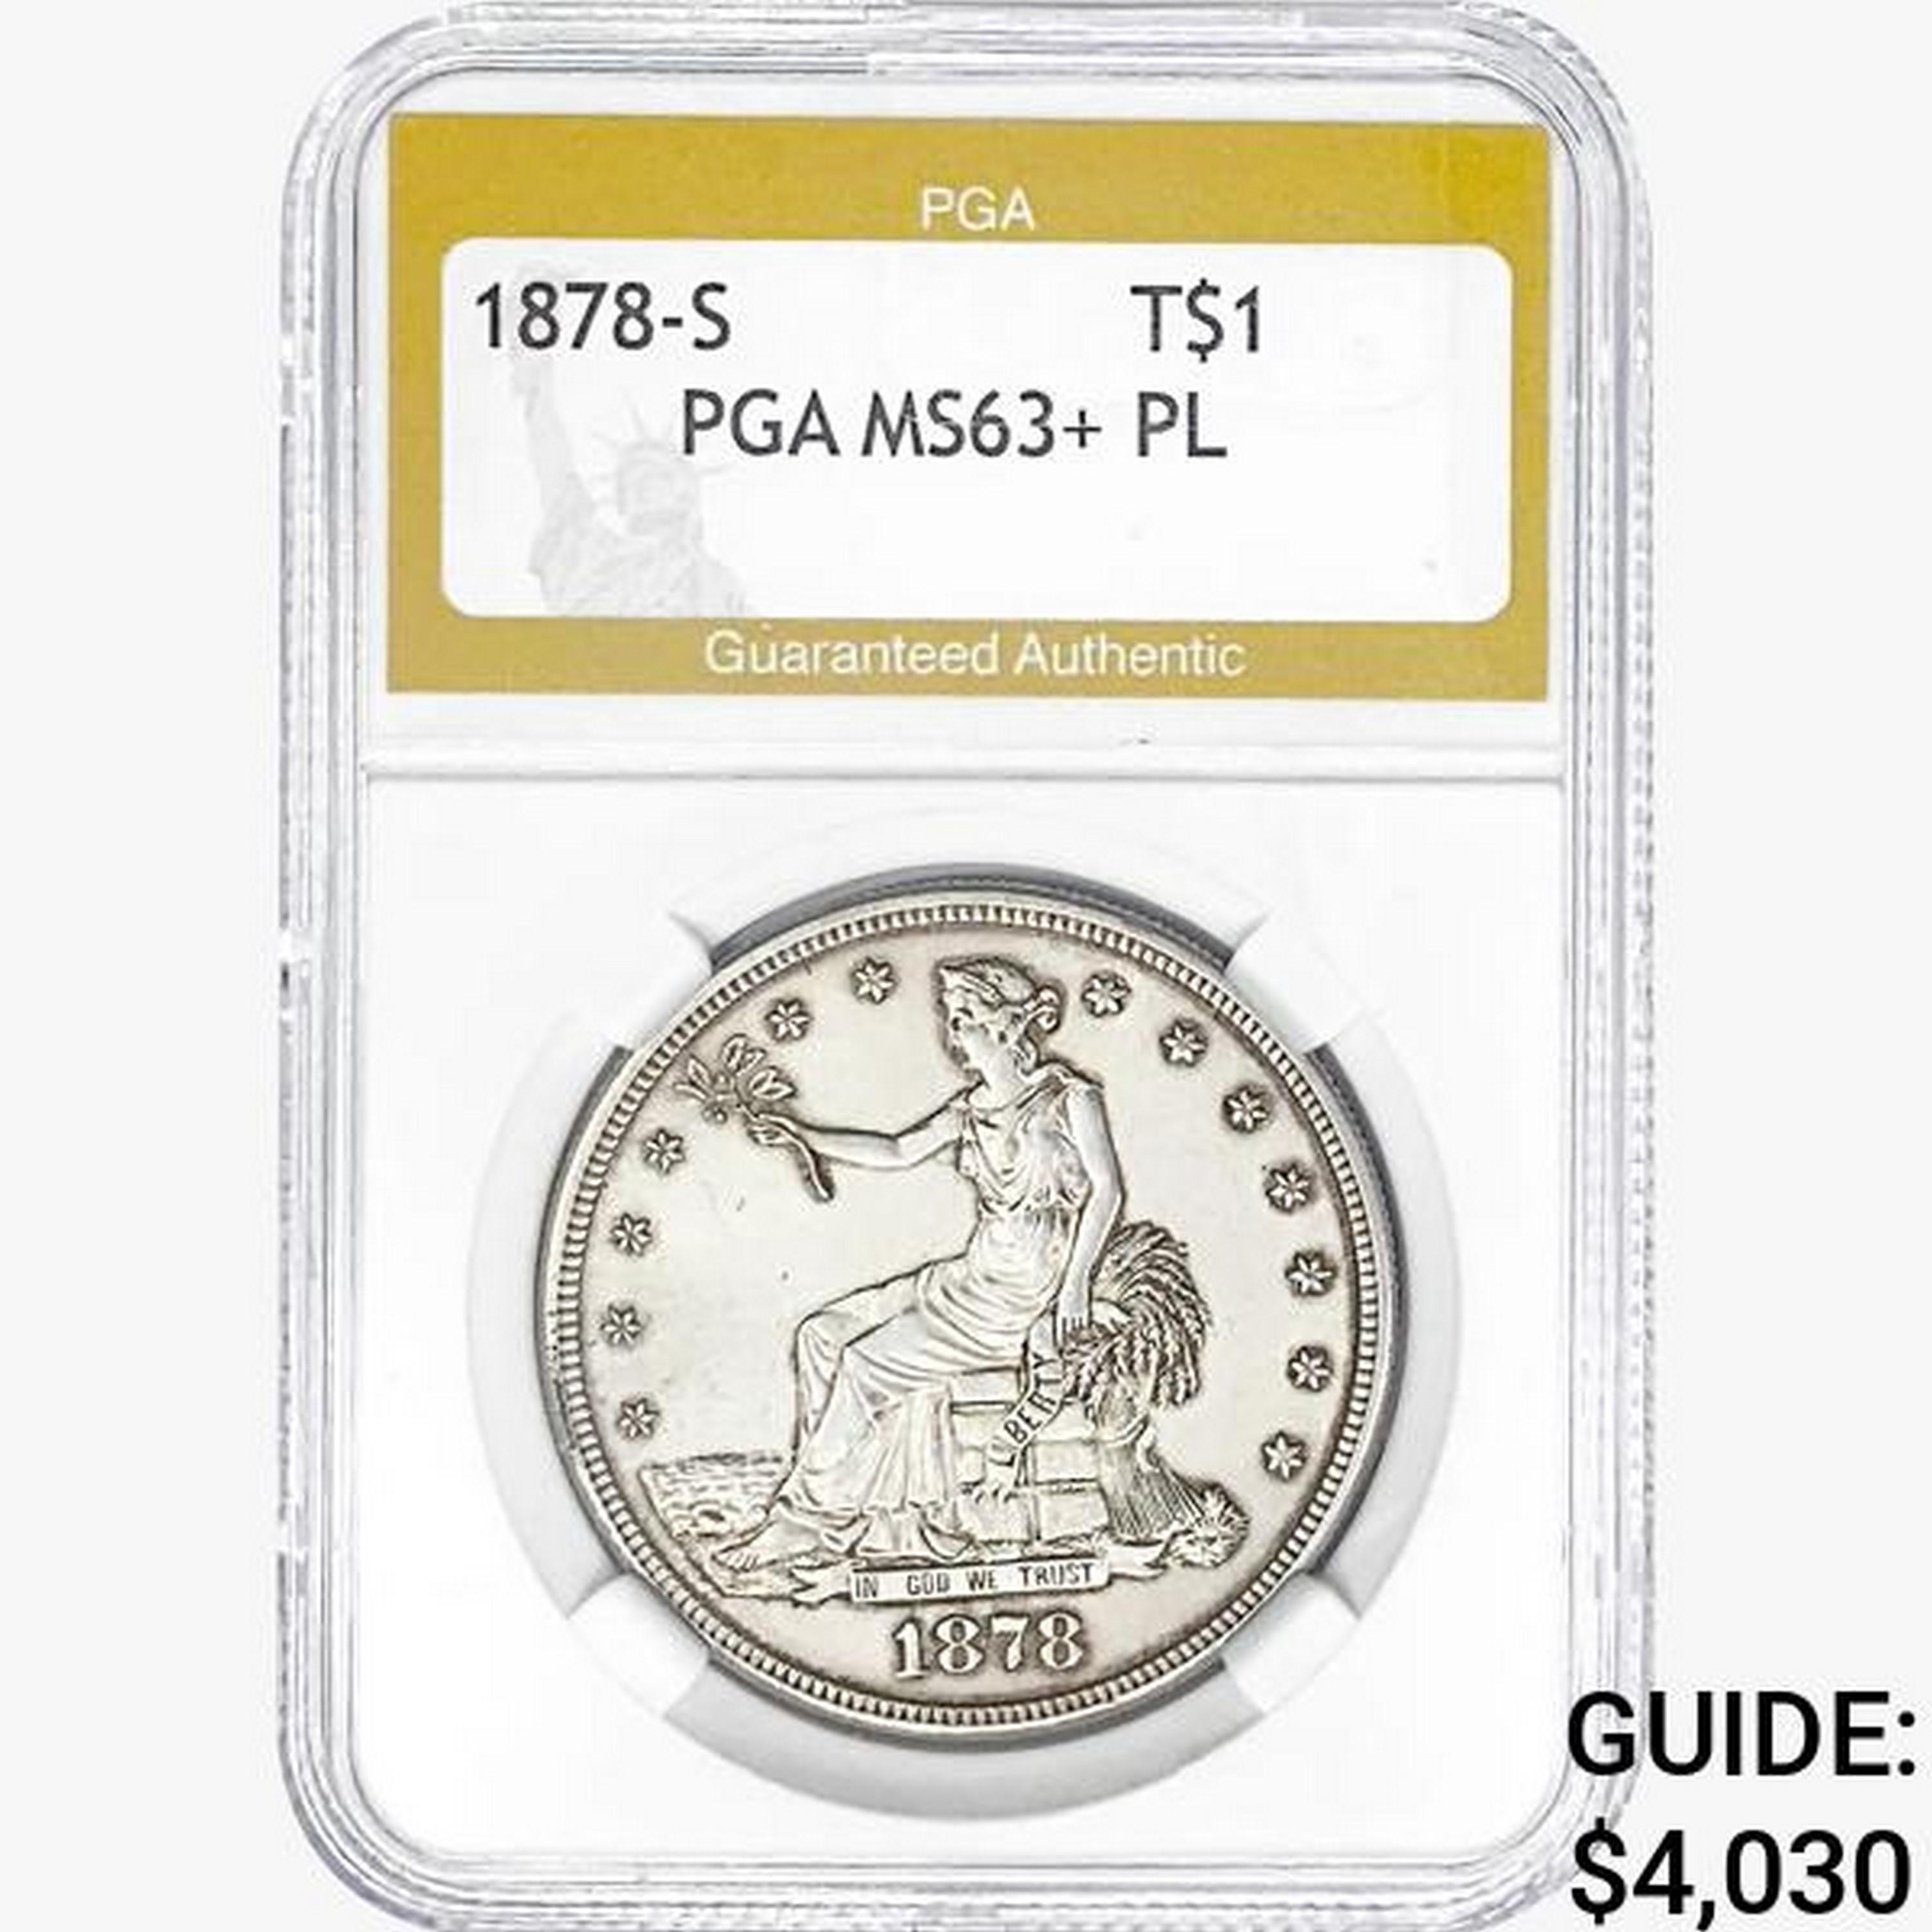 1878-S Silver Trade Dollar PGA MS63+ PL